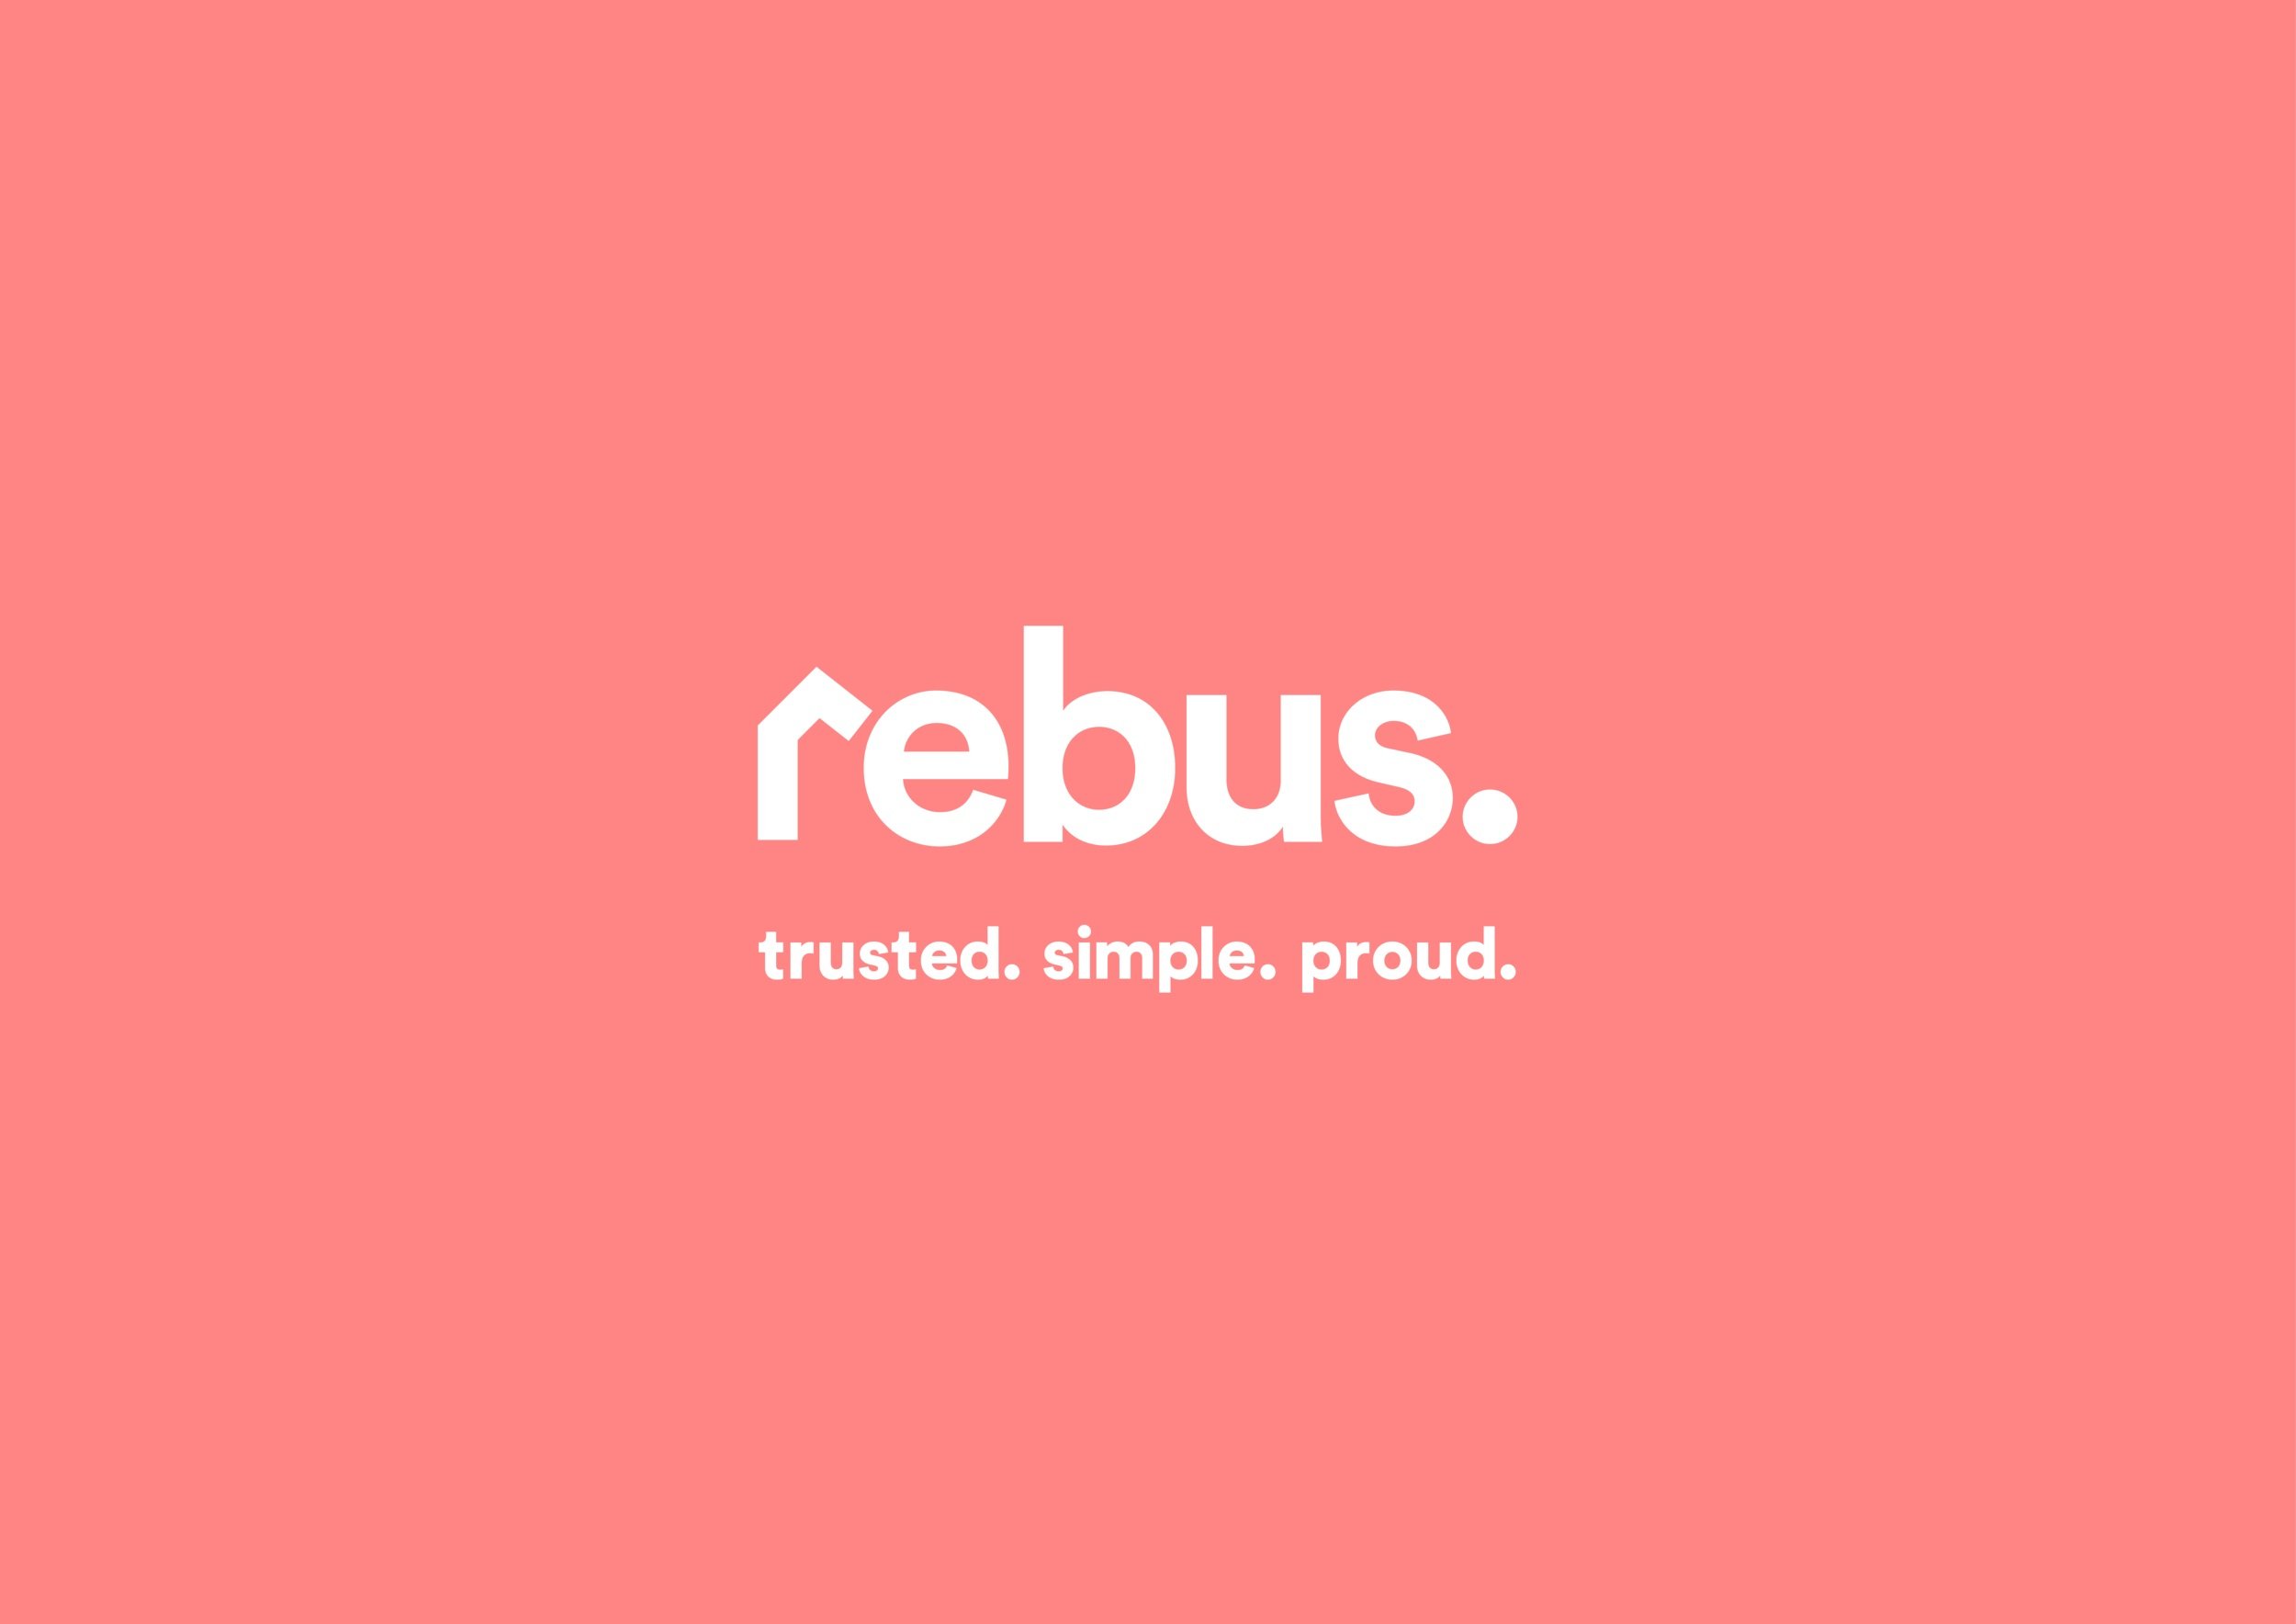 Freelance-graphic-designer-rebus company font logo in grapefruit colour background